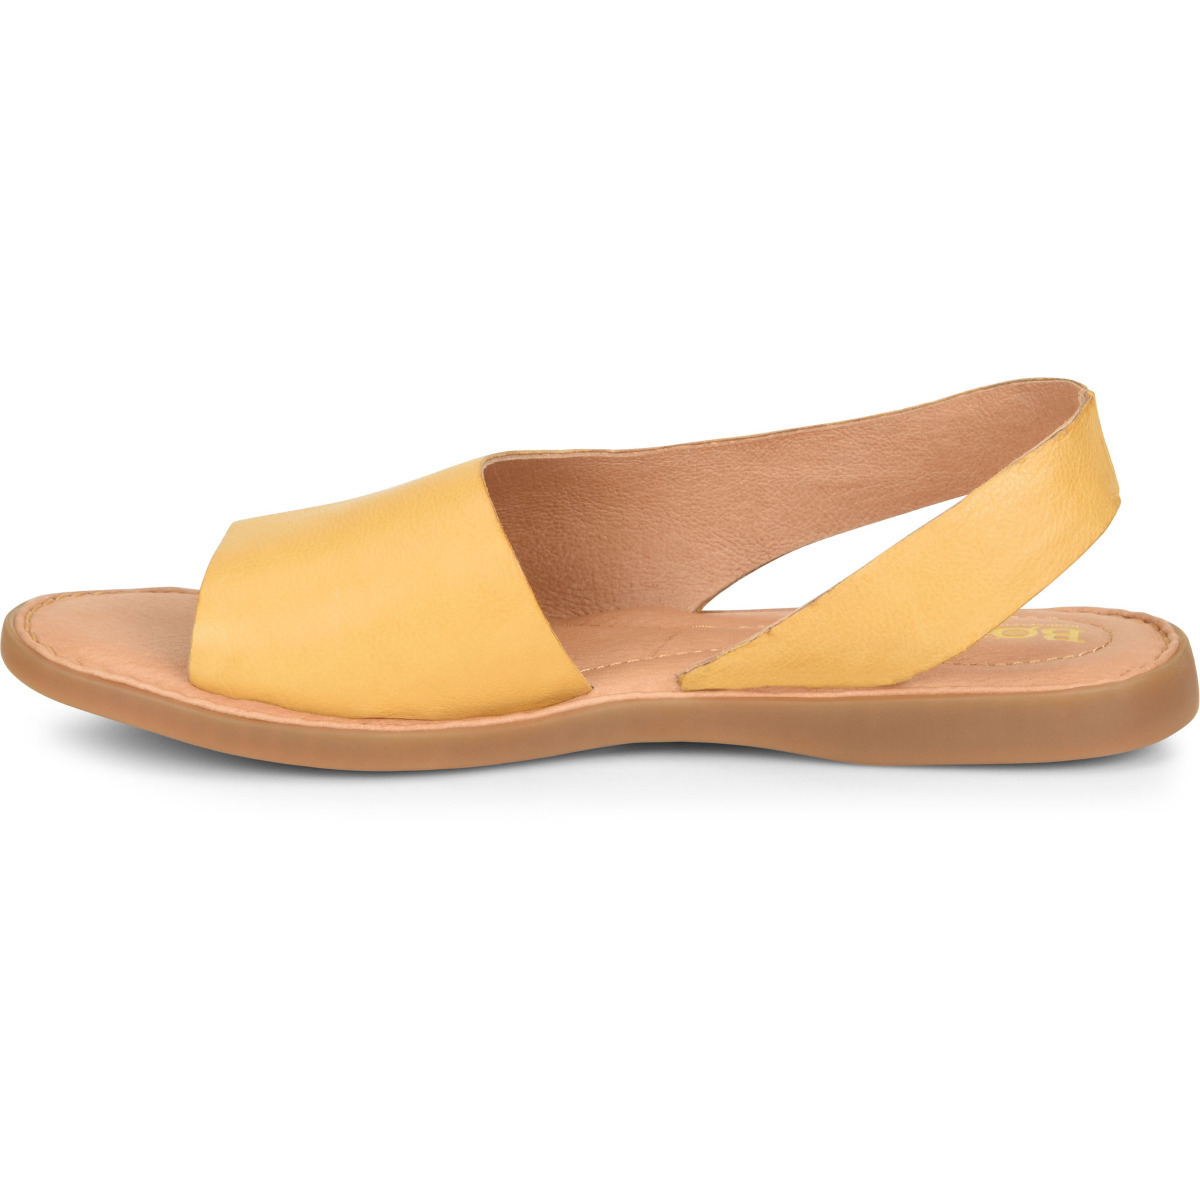 Born Women's Inlet Sandal Orca (Yellow) - BR0002292 YELLOW - YELLOW, 6